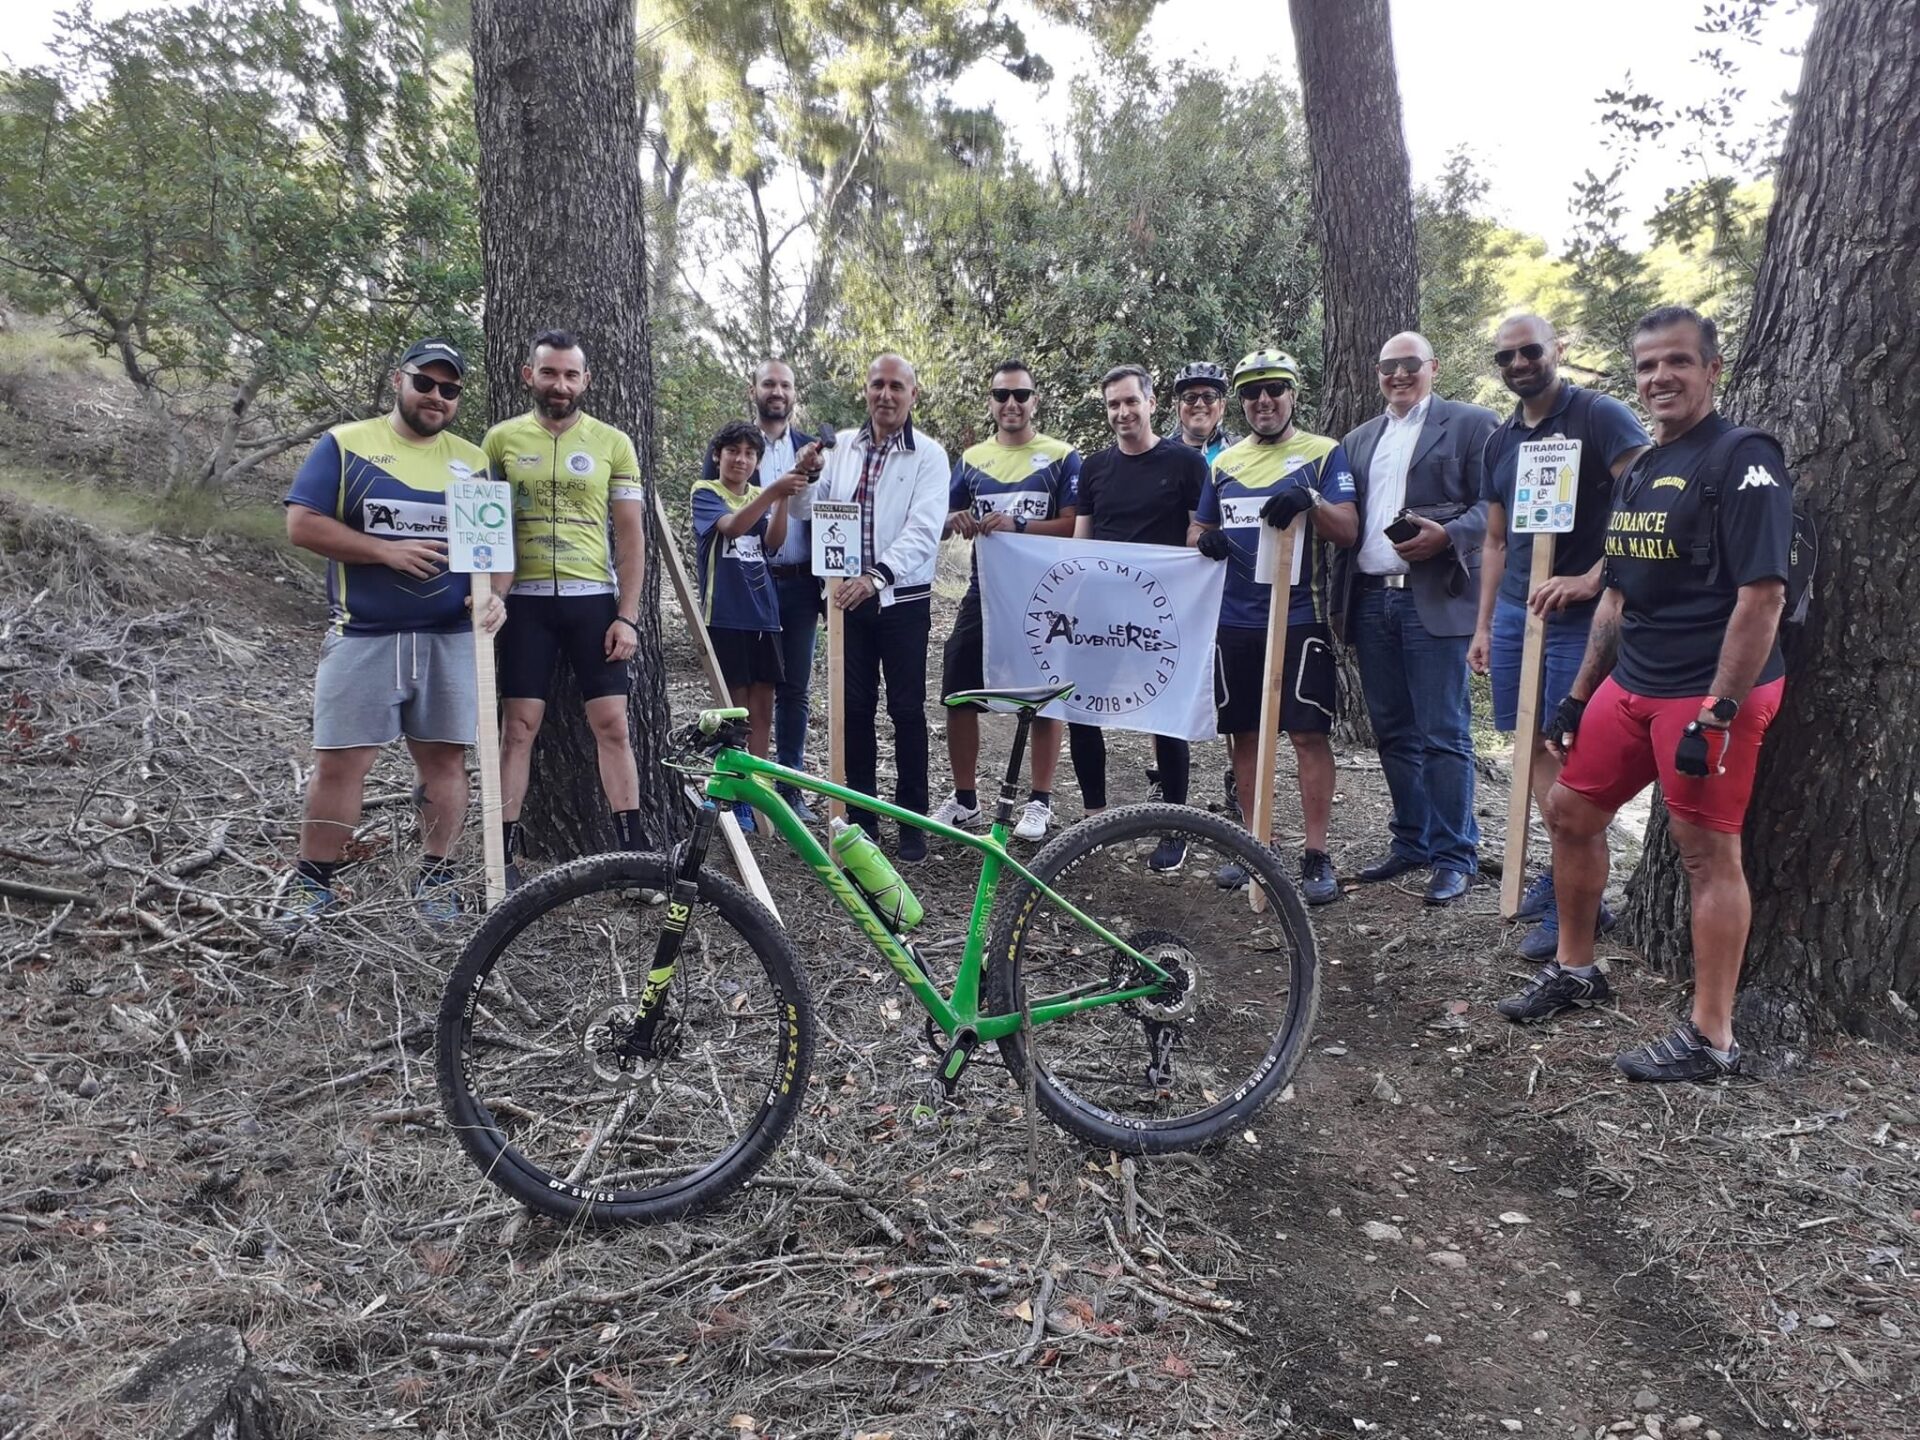 studio pivot Habitual Ποδηλατικός Σύλλογος Λέρου: Μαζί με τον δήμο τοποθετήθηκαν σημάνσεις  μονοπατιών | Cycle 365